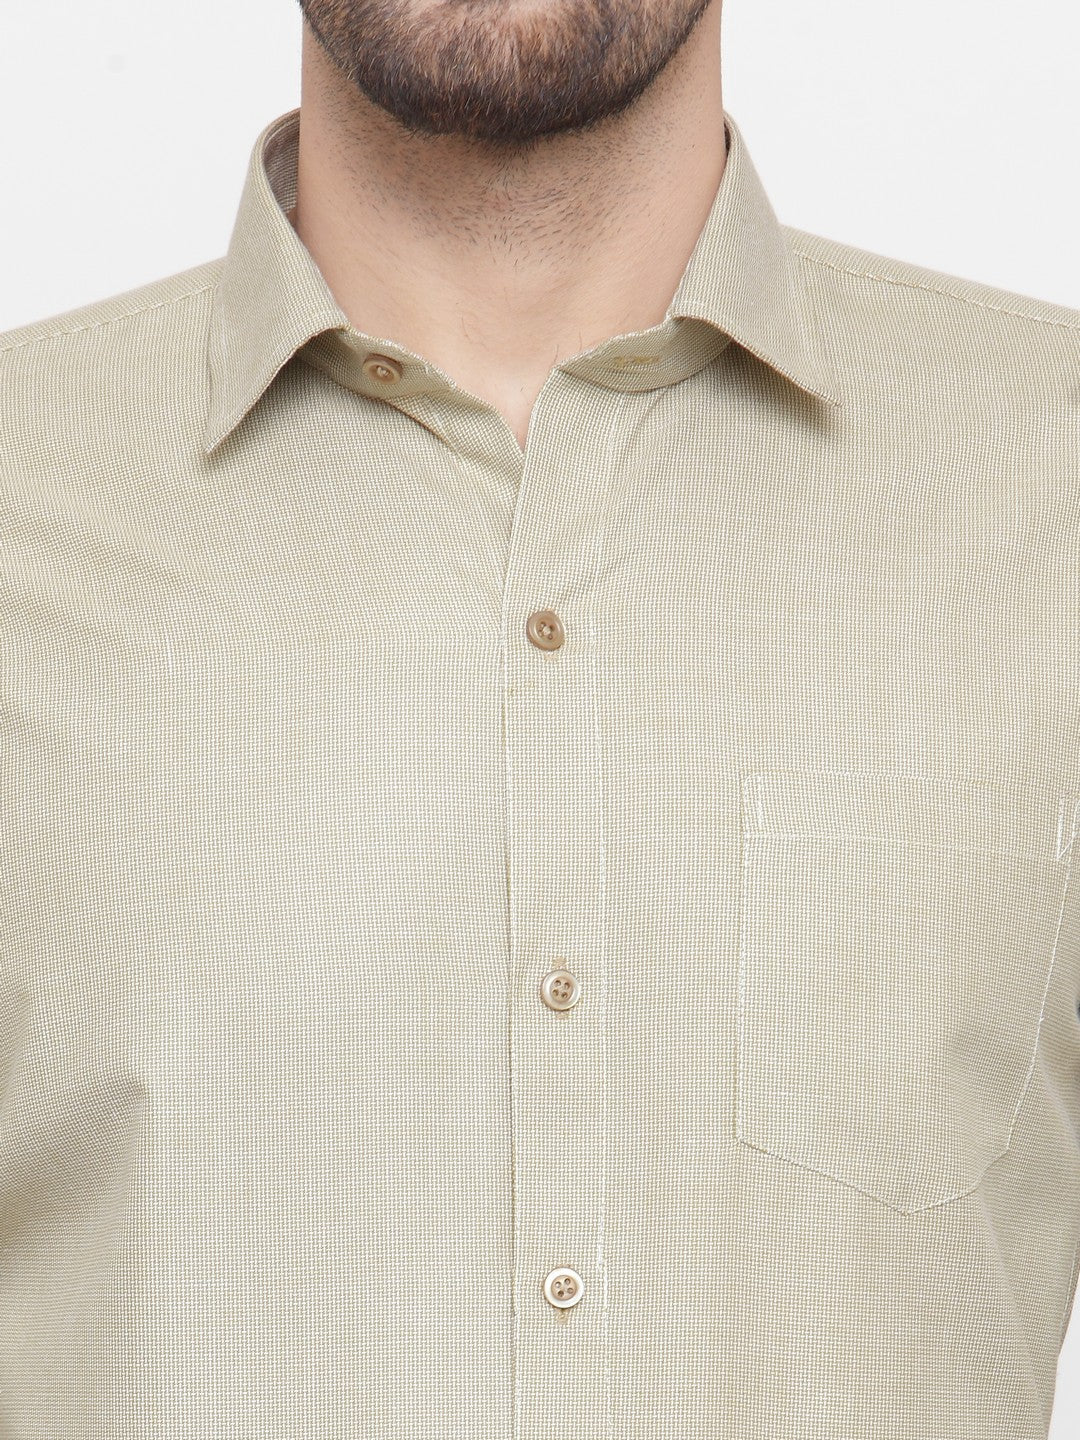 Jainish Olive Men's Cotton Geometric Formal Shirts ( SF 434Olive )